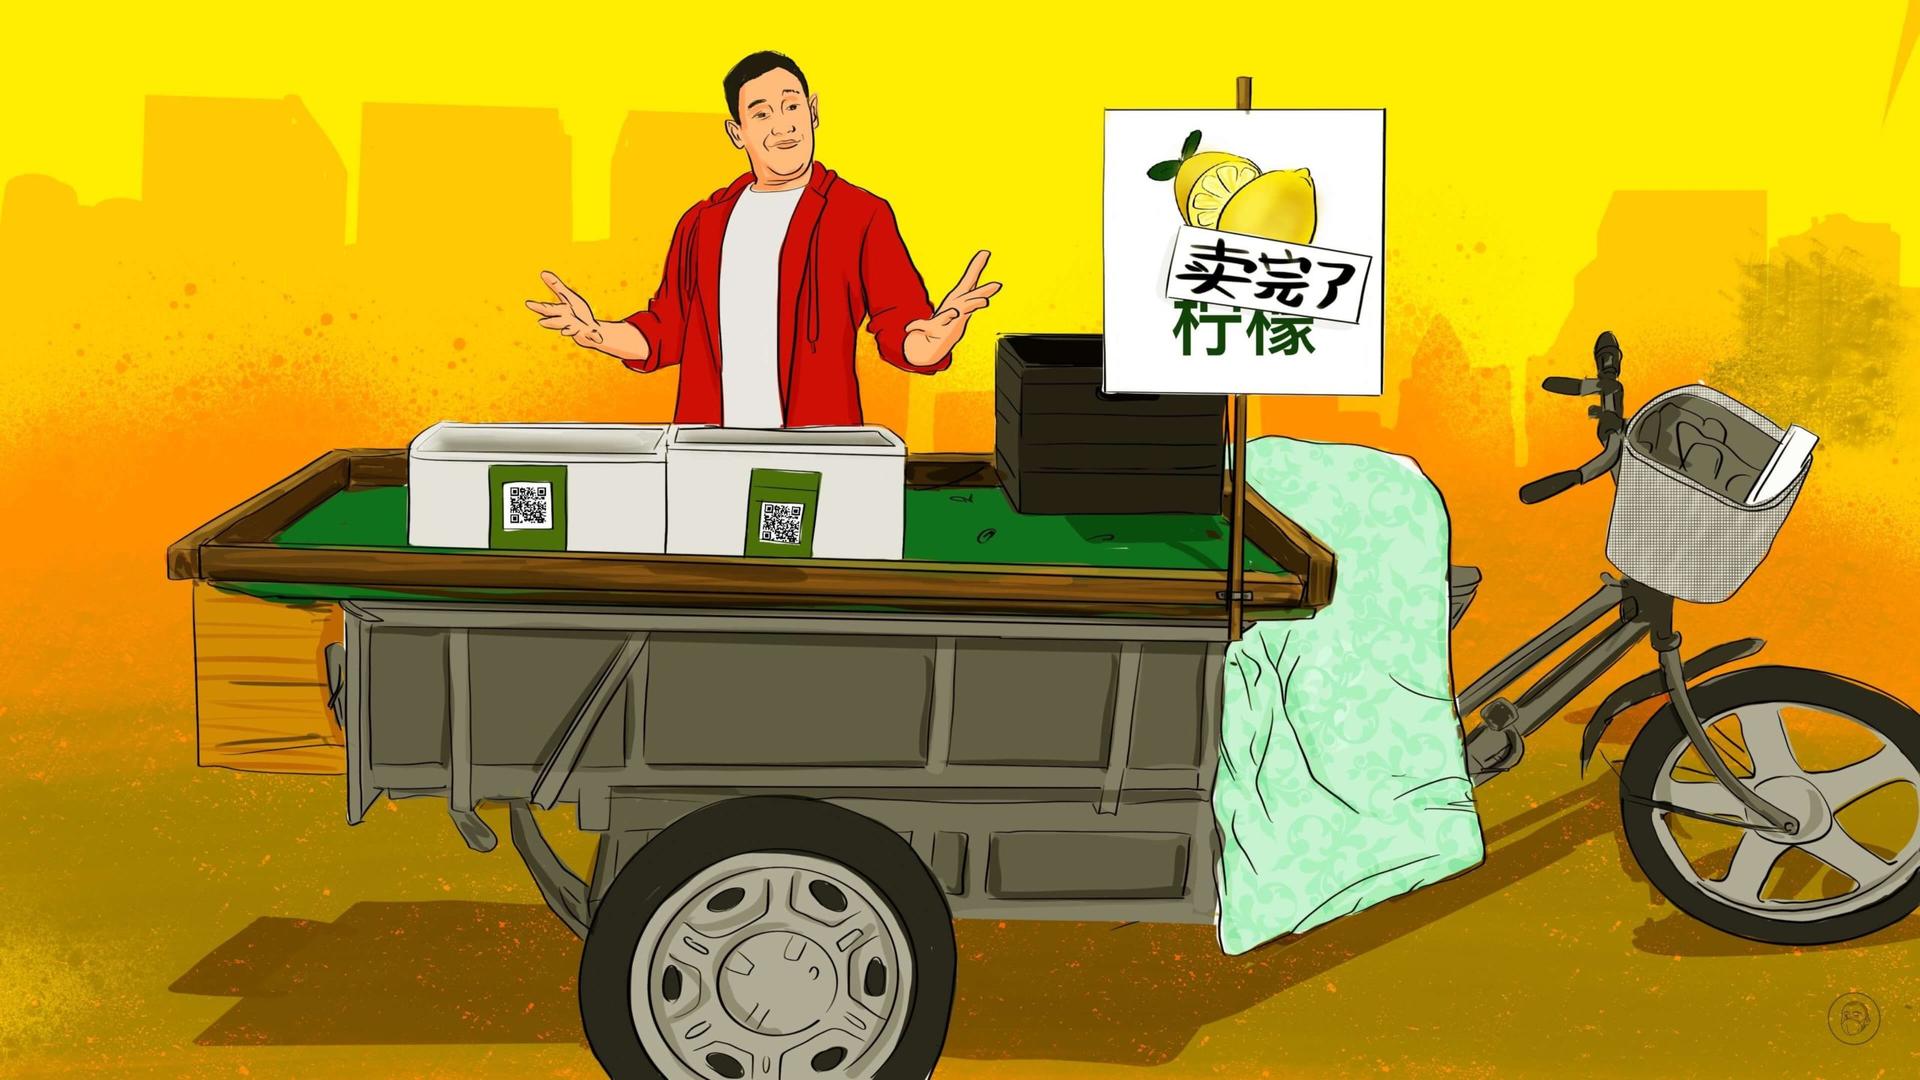 An illustration by Alex Santafe depicting a street vendor of Lemons after selling out